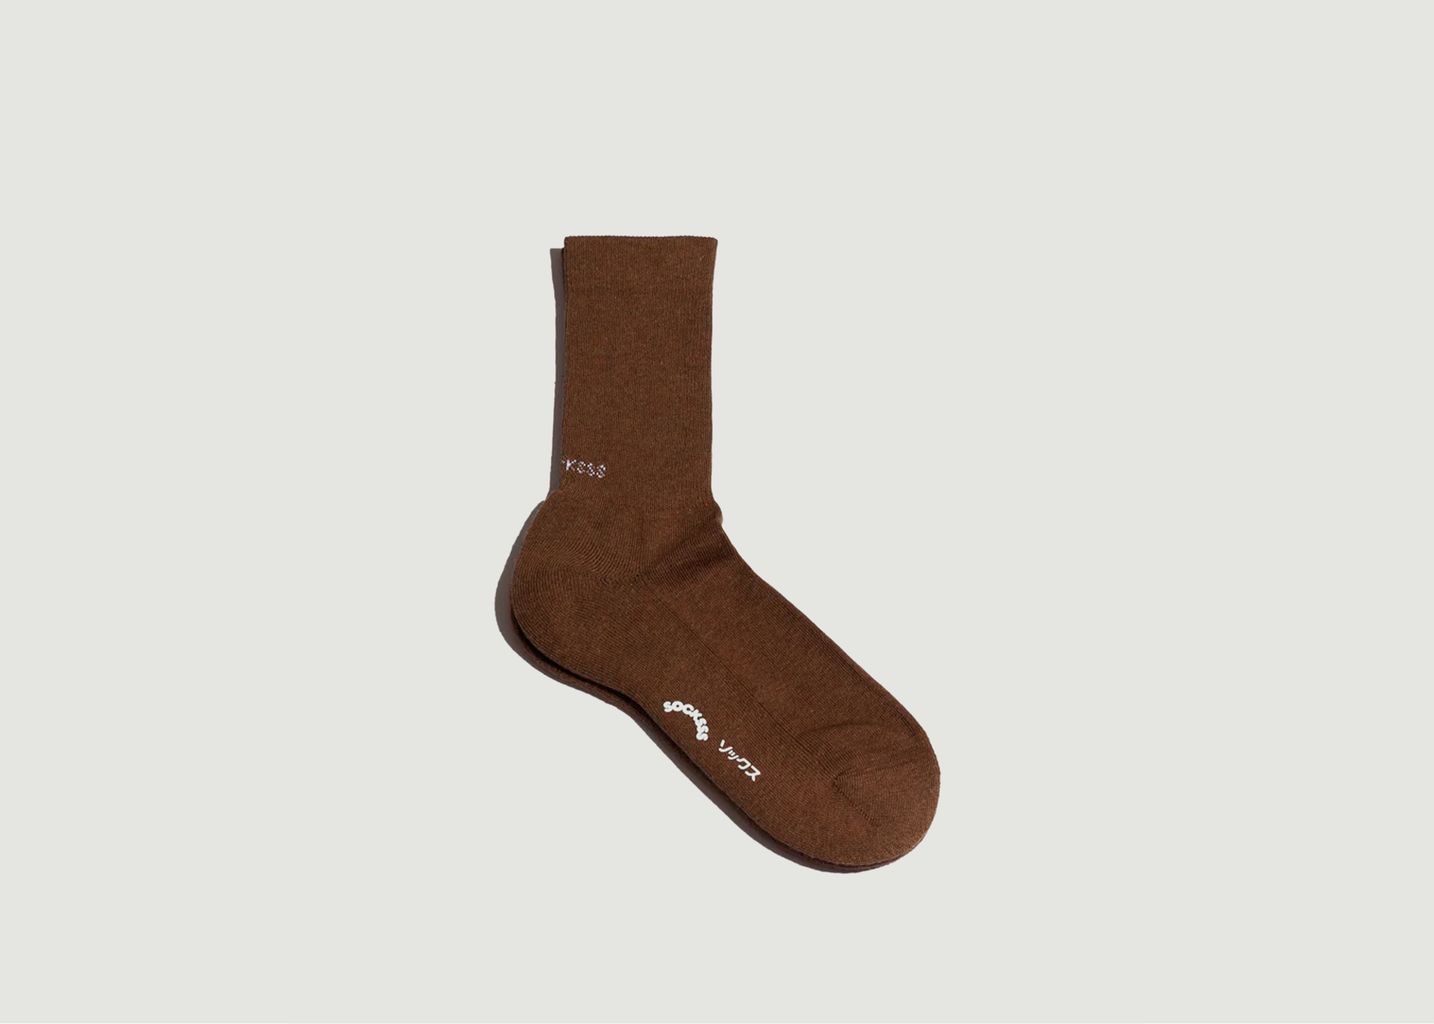 Chaussettes Golden Brown en coton biologique - Socksss